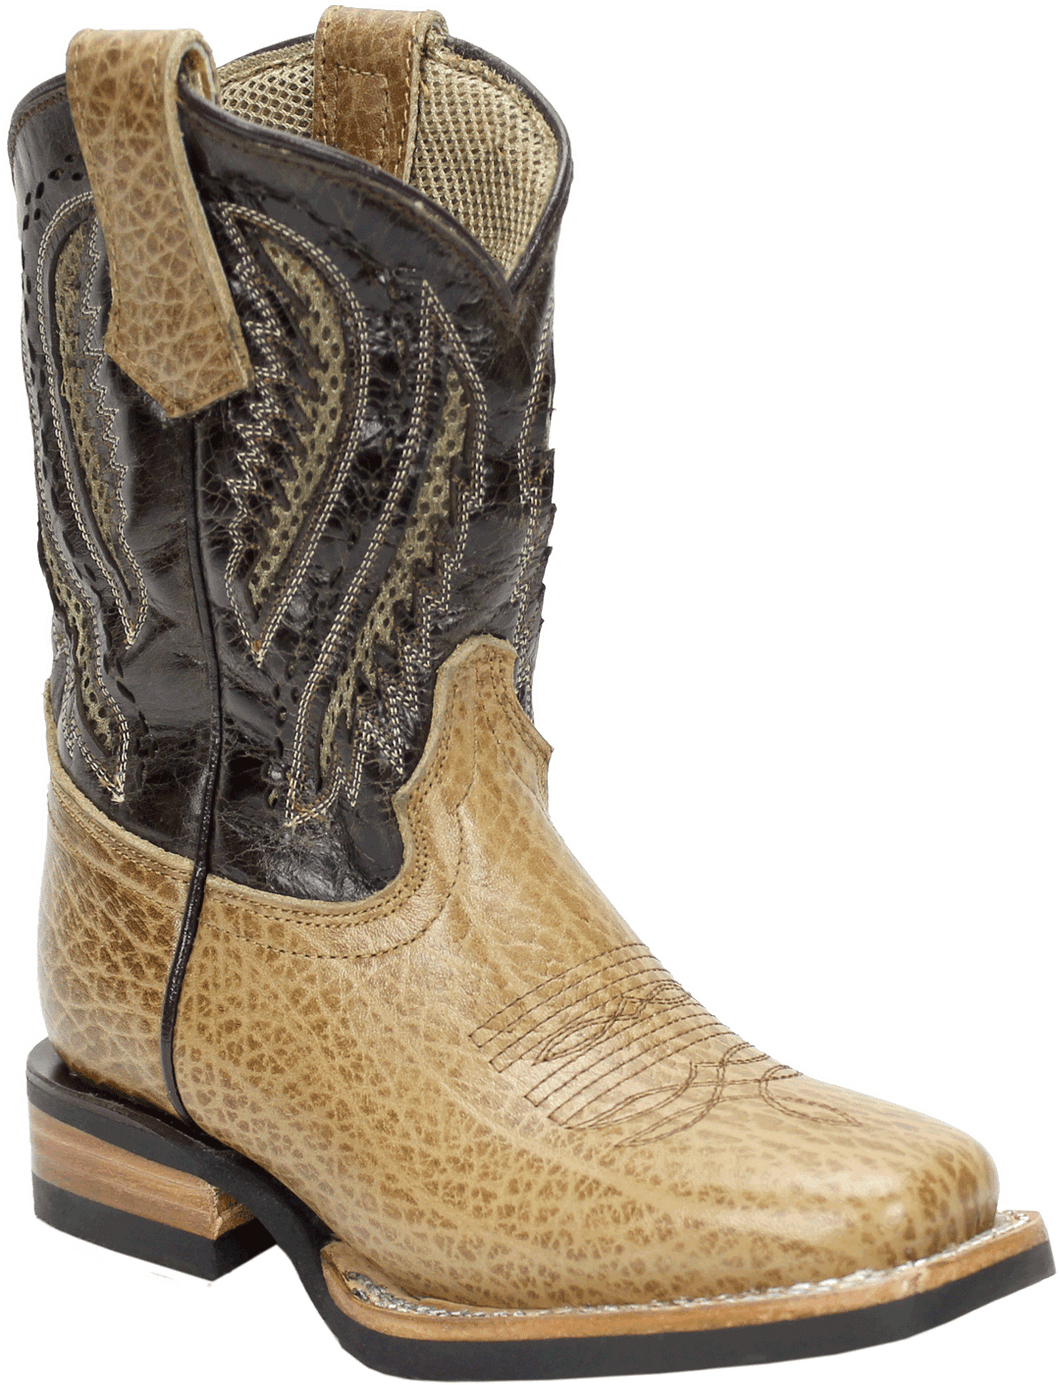 Silverton® Kids Alamo All Leather Square Toe Boots (Tan)